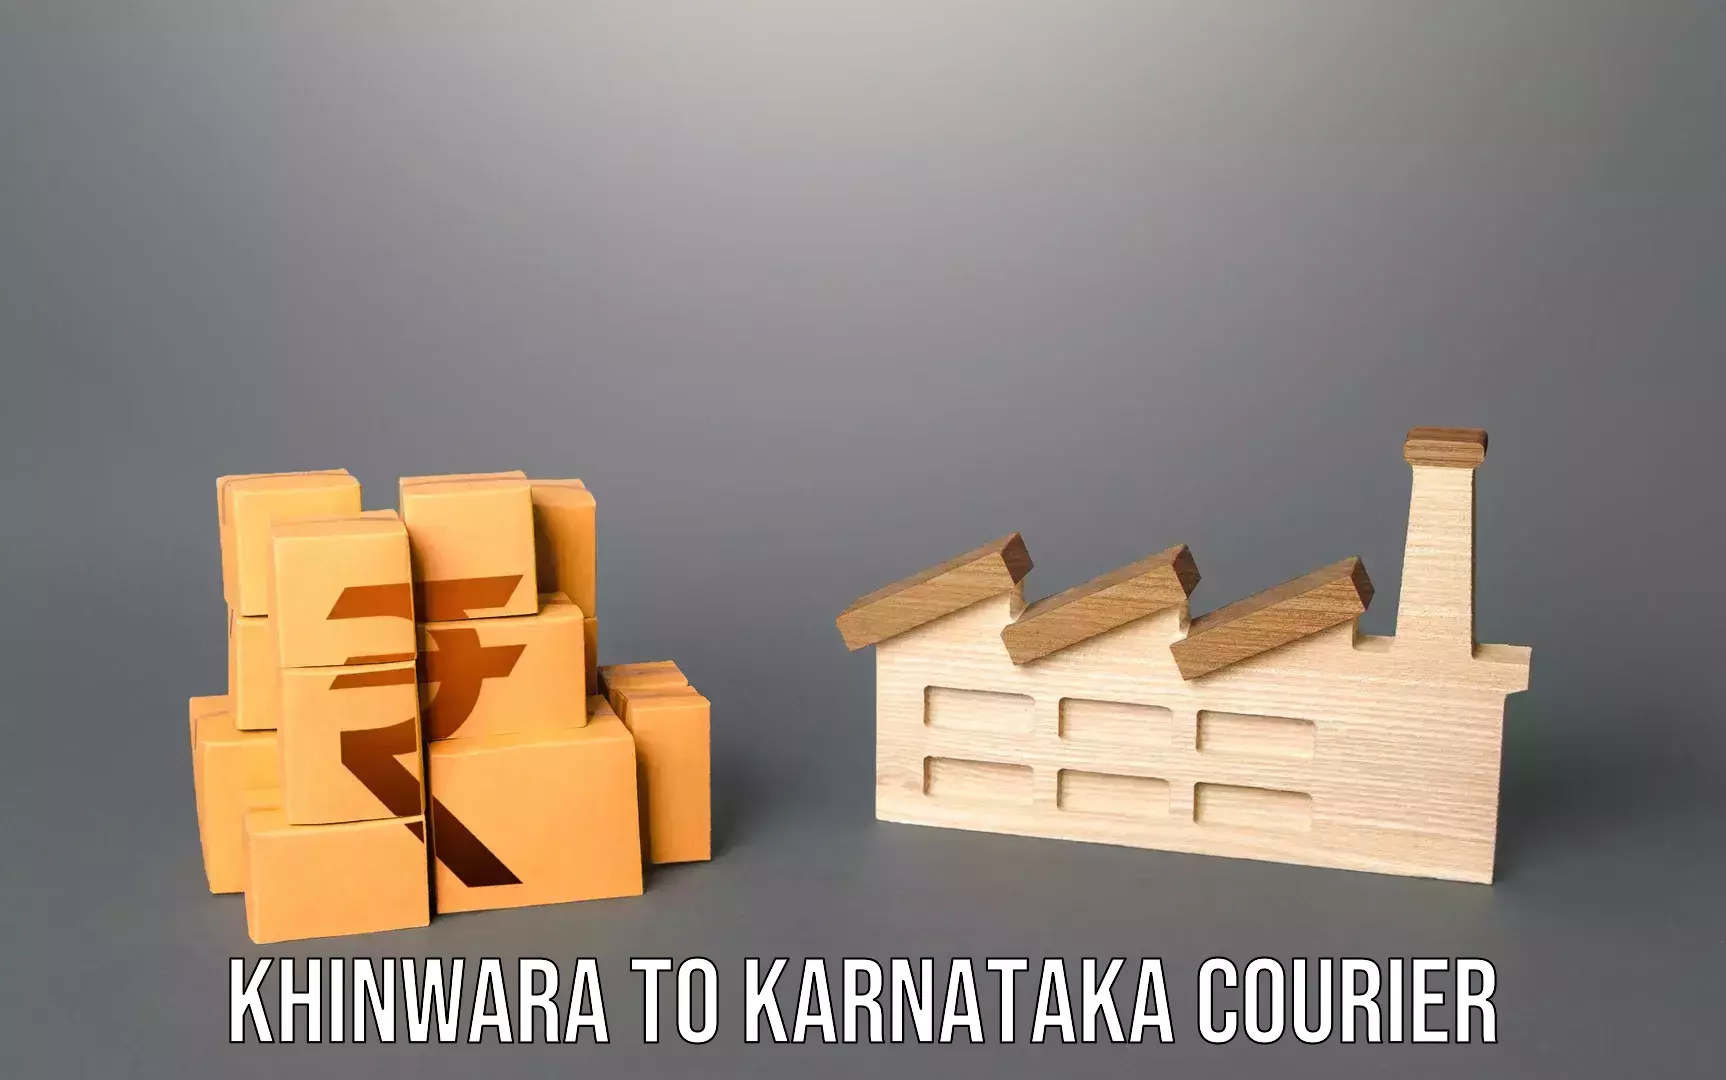 Door-to-door baggage service Khinwara to Karnataka